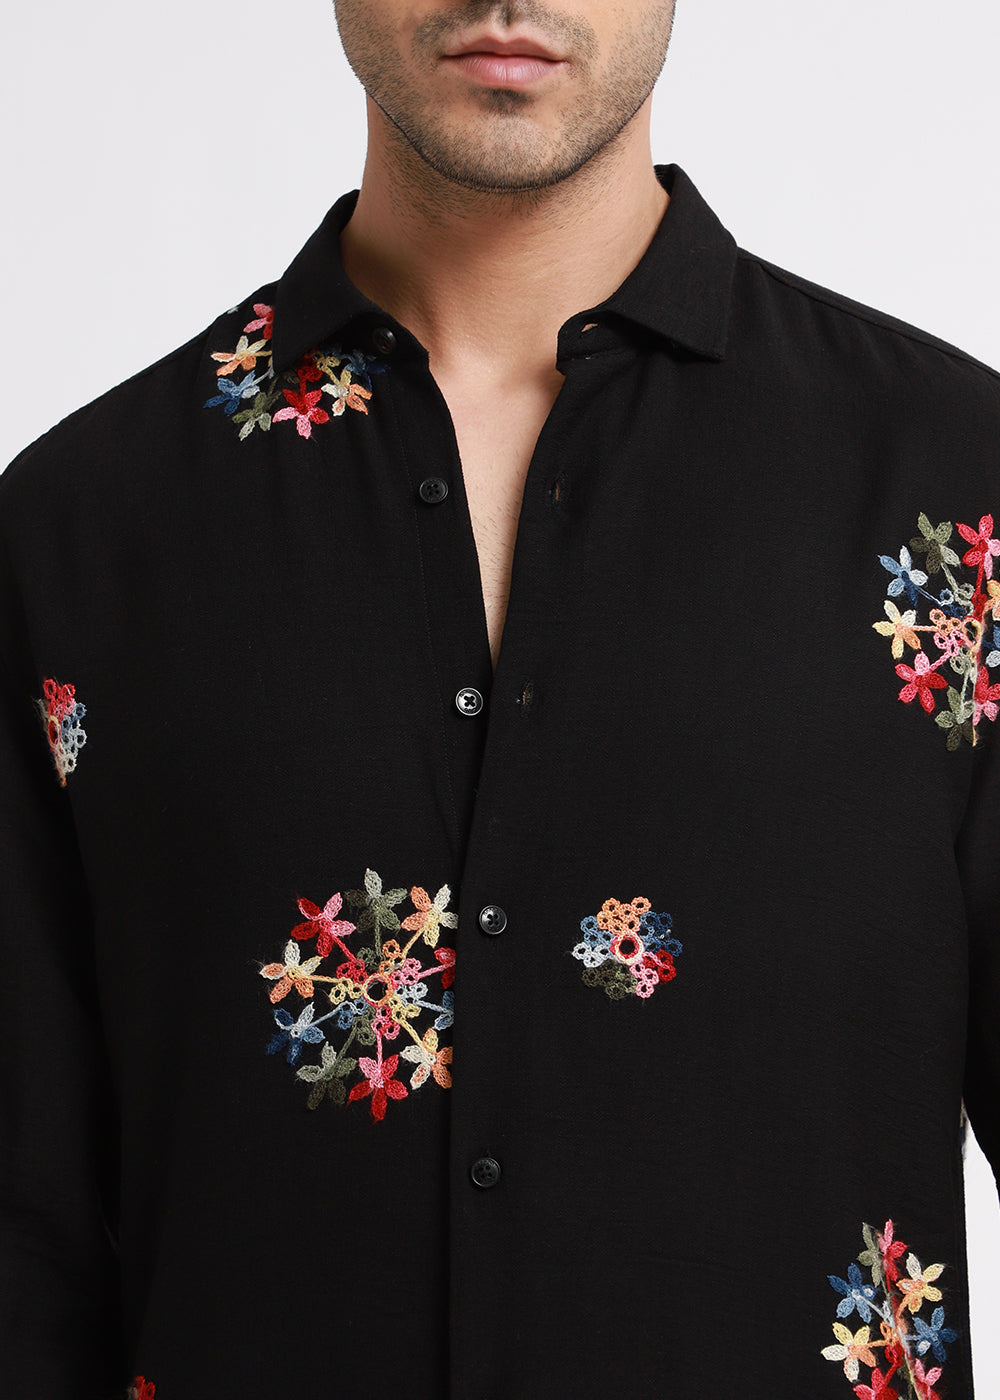 Black Floral Embroidered Shirt